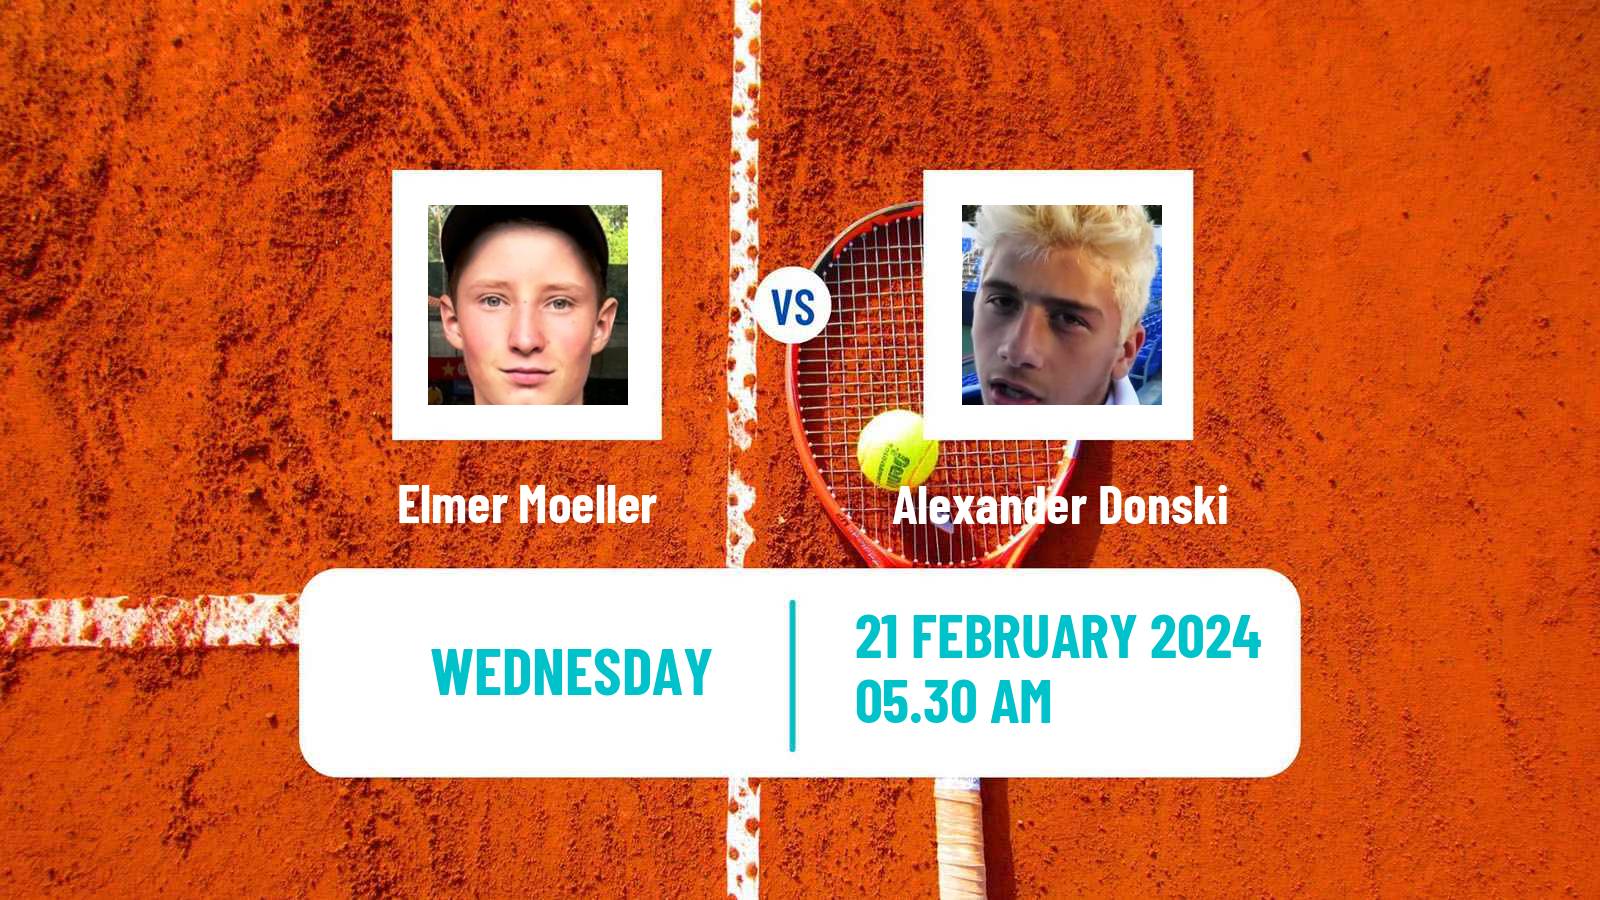 Tennis ITF M25 Vila Real De Santo Antonio 2 Men Elmer Moeller - Alexander Donski